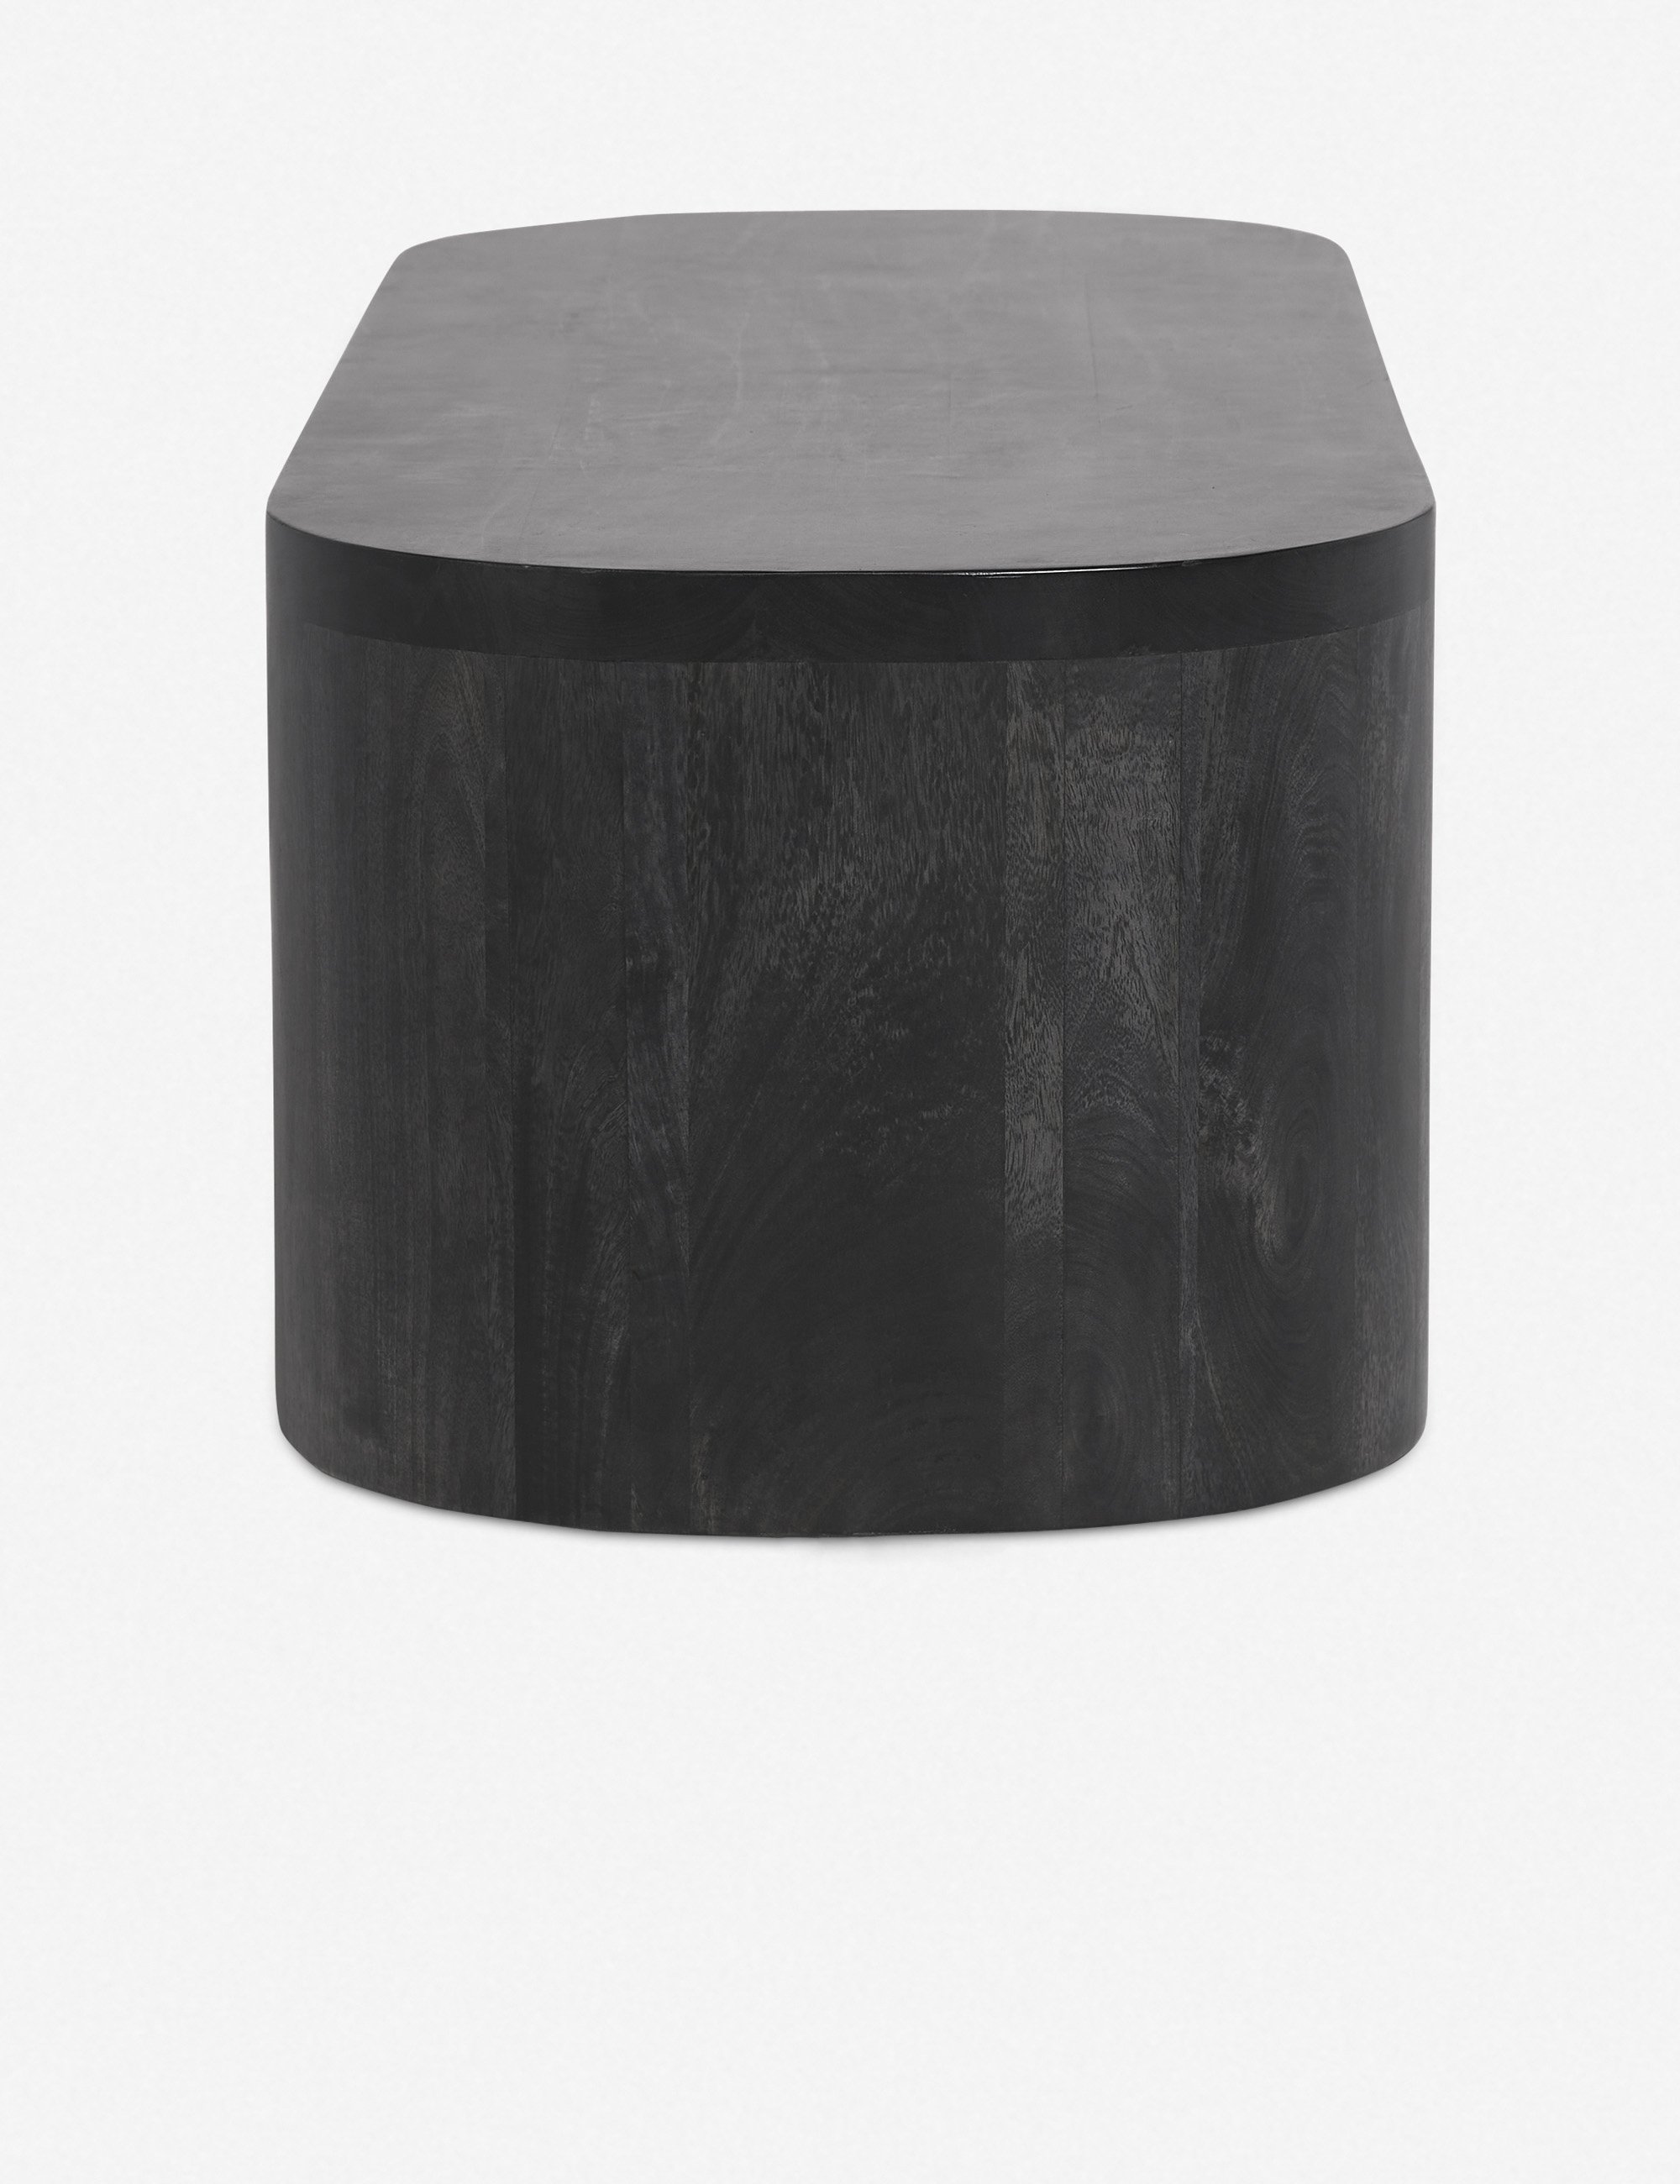 Luna Oval Coffee Table, Black - Image 3